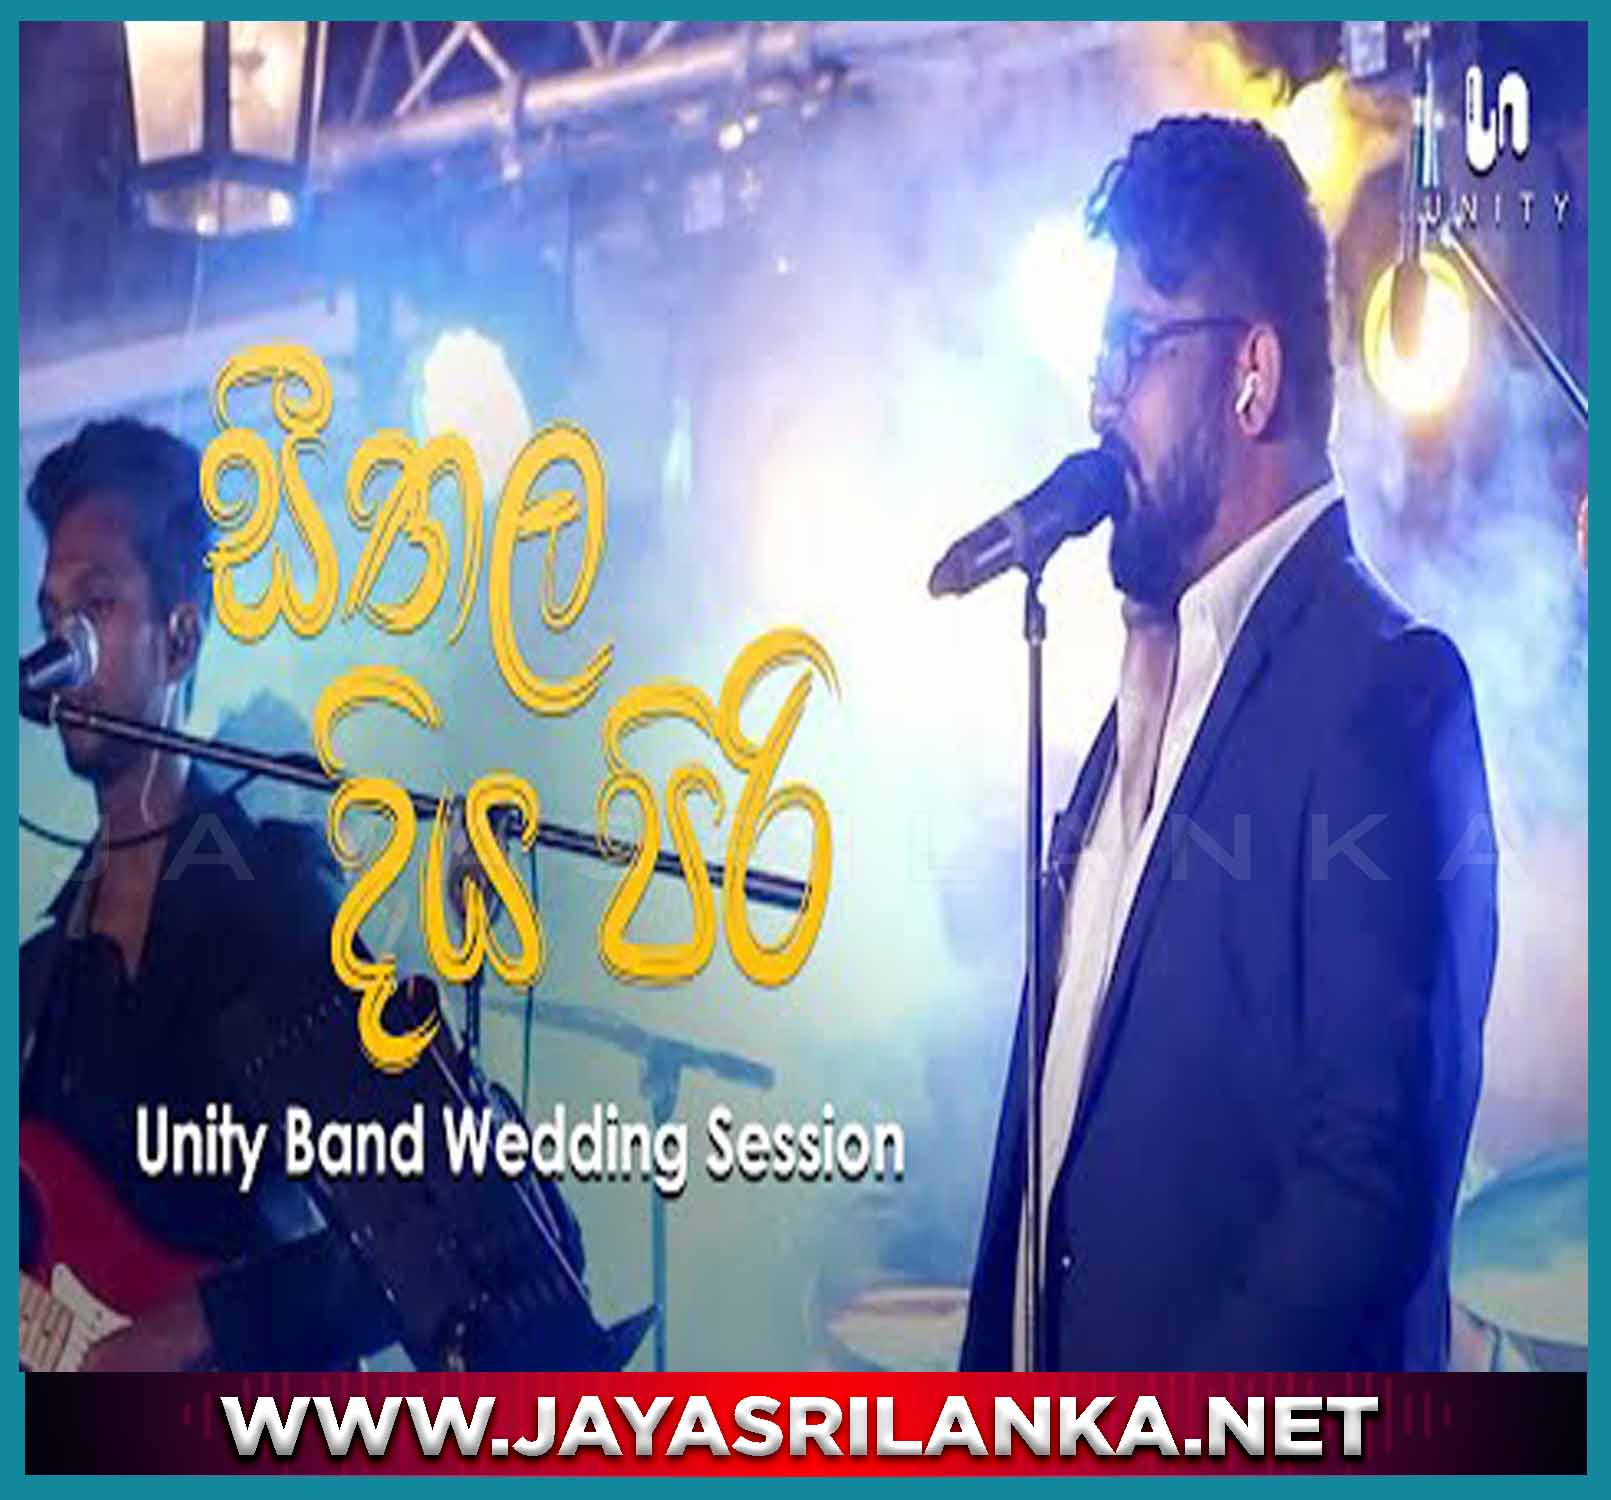 Seethala Diya Piri (Unity Band Wedding Session)